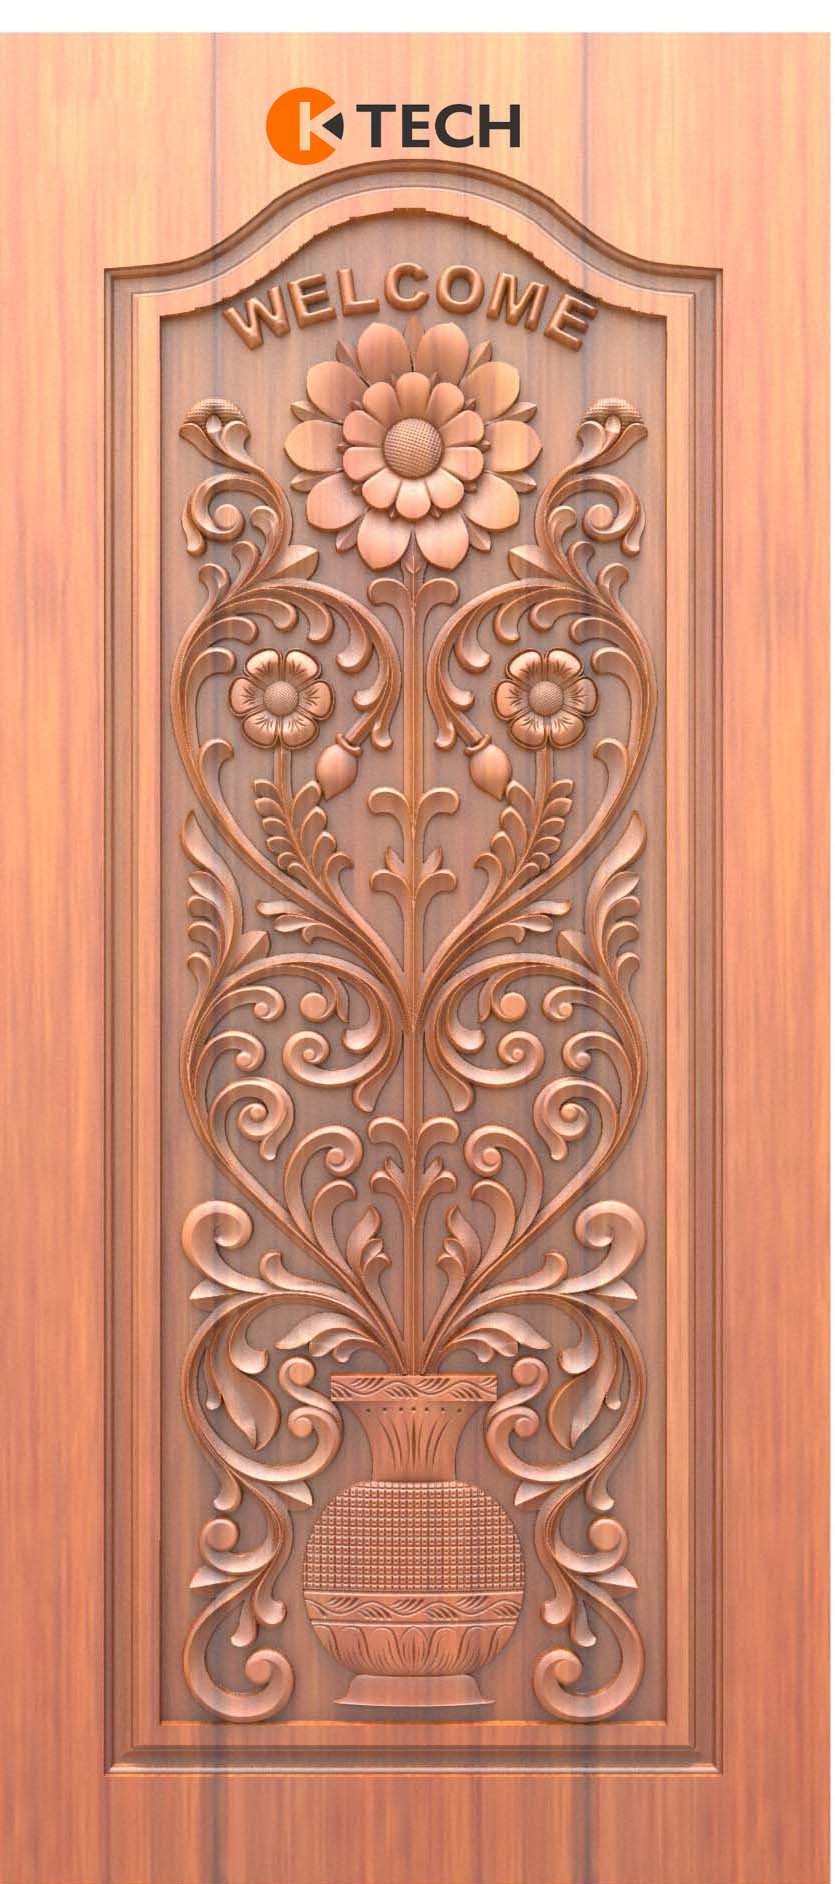 K-TECH CNC Doors Design 171